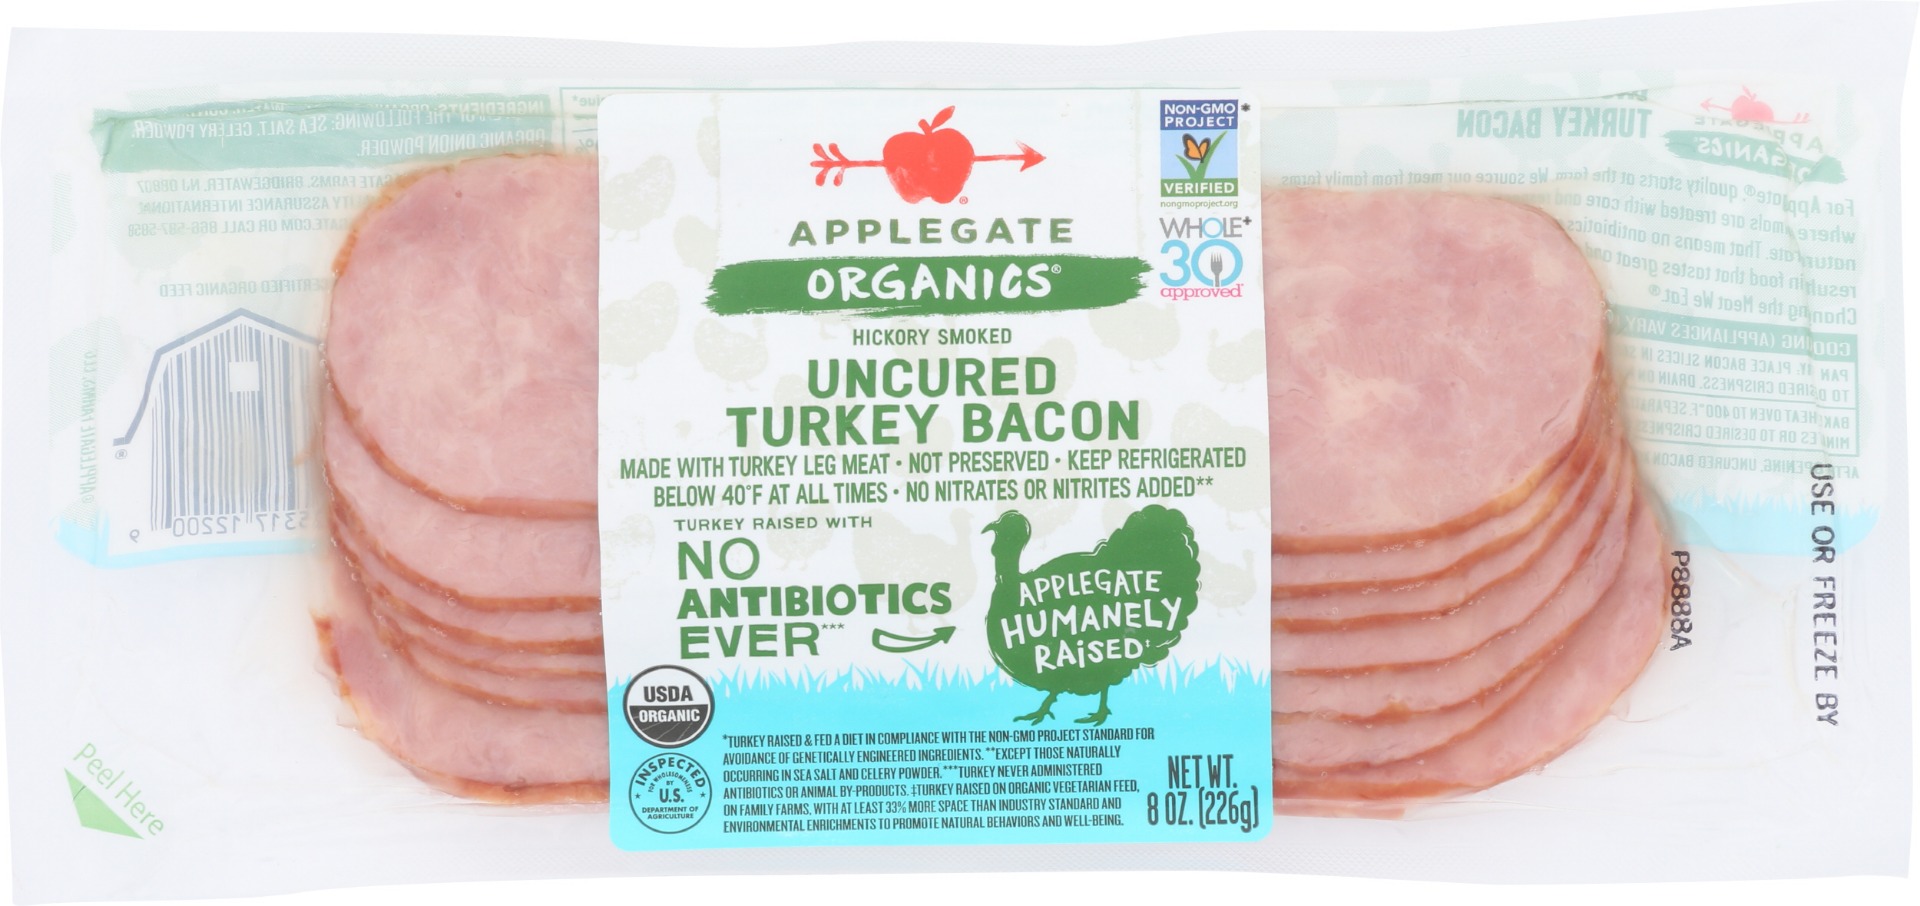 APPLEGATE: Organic Uncured Turkey Bacon, 8 oz | Grocery Stores Near Me - 0025317122009